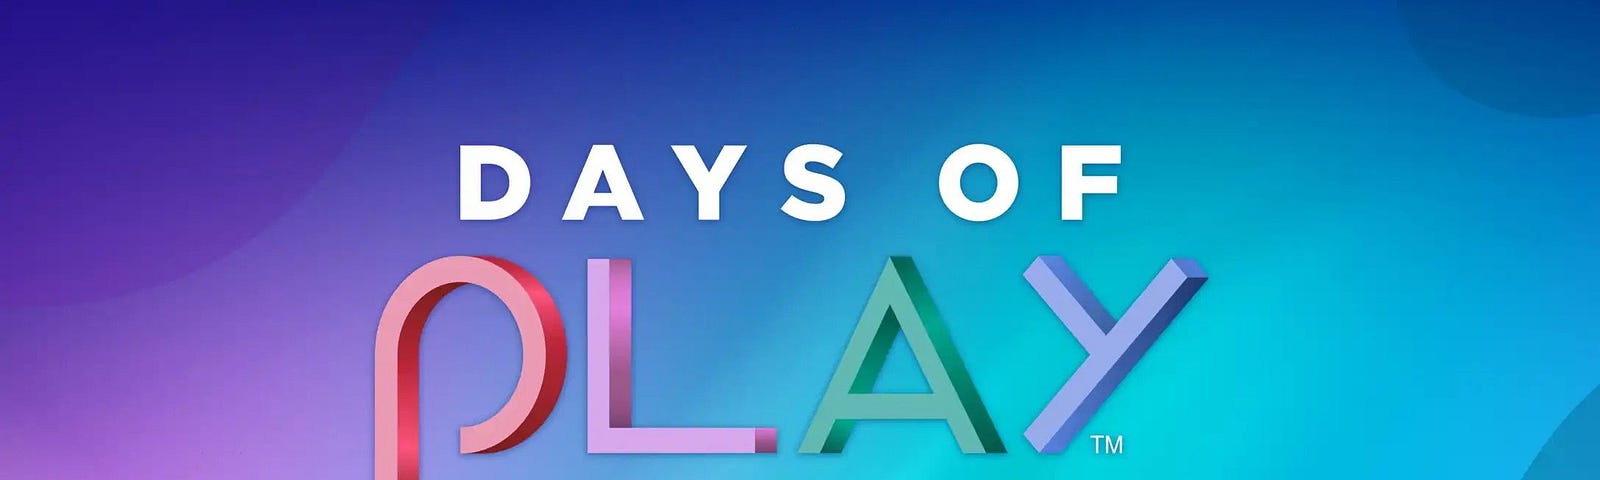 PlayStation Days of Play Logo